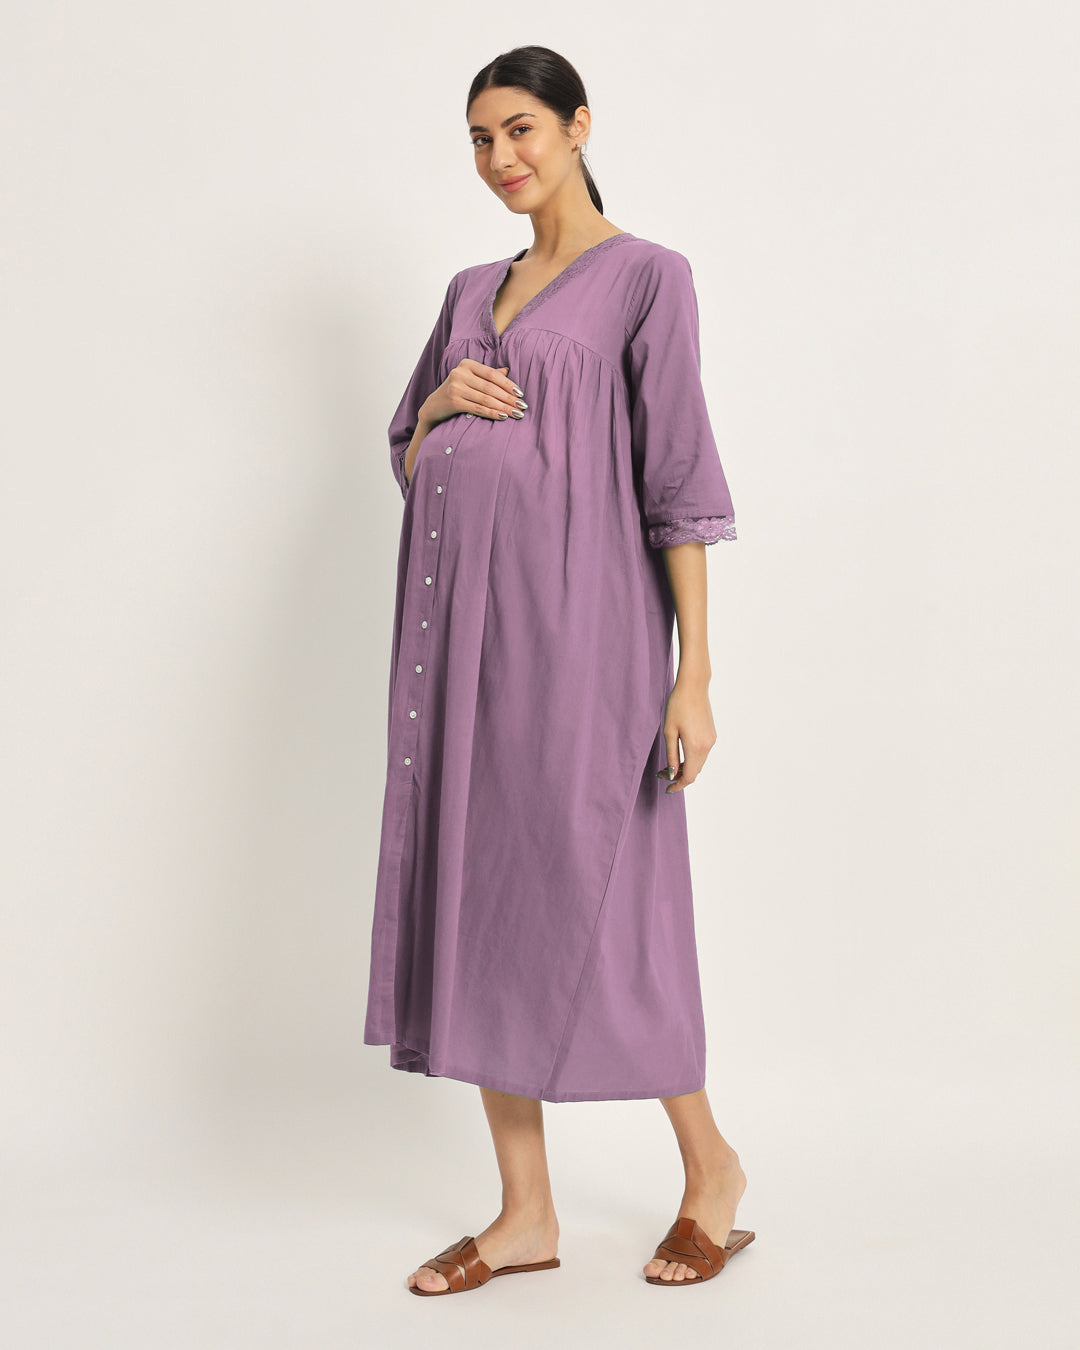 Combo: Iris Pink & Sage Green Stylish Preggo Maternity & Nursing Dress - Set of 2